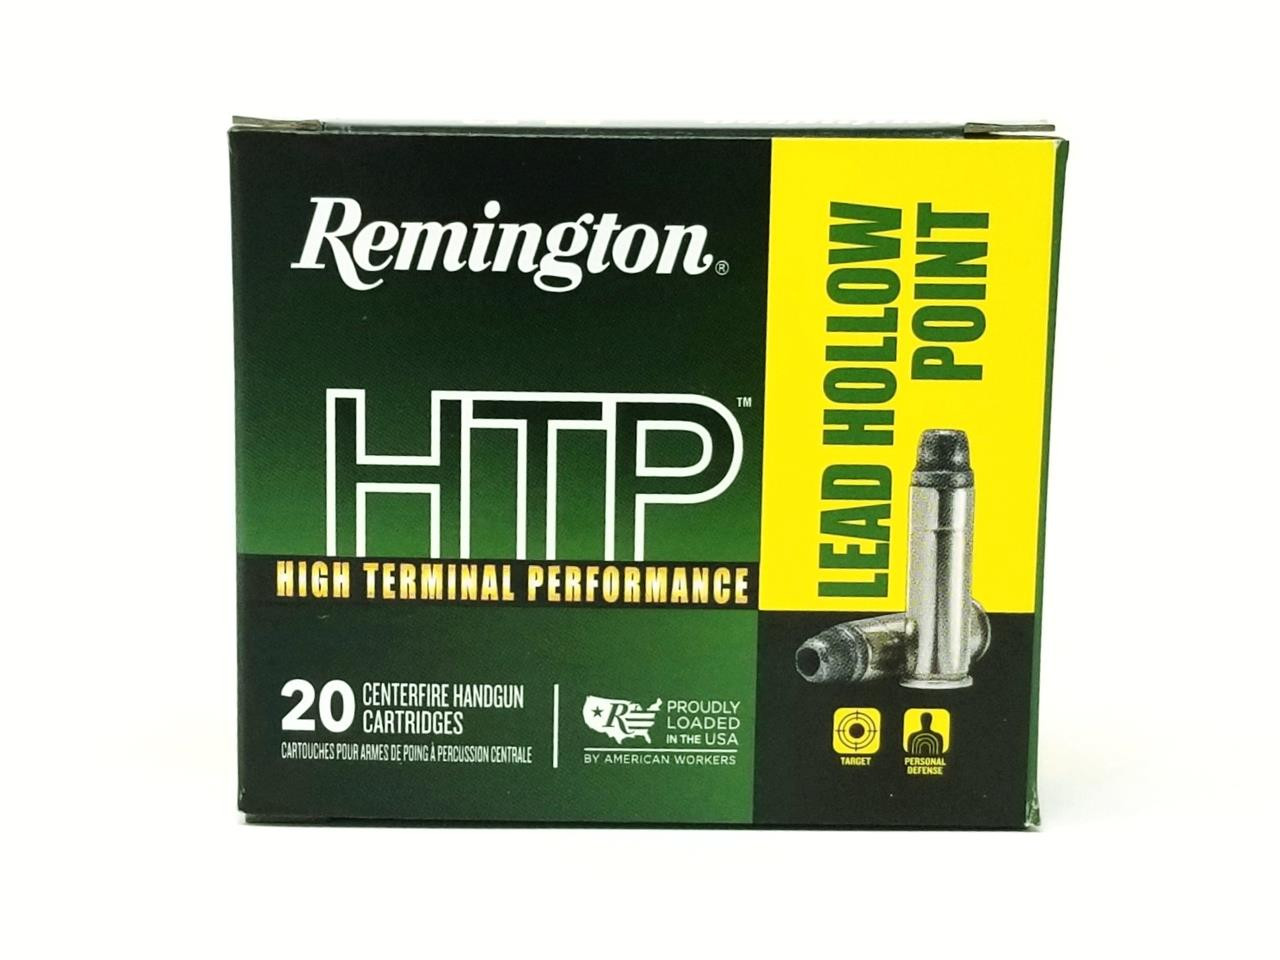 Remington HTP High Terminal Performance 38 Special LHP